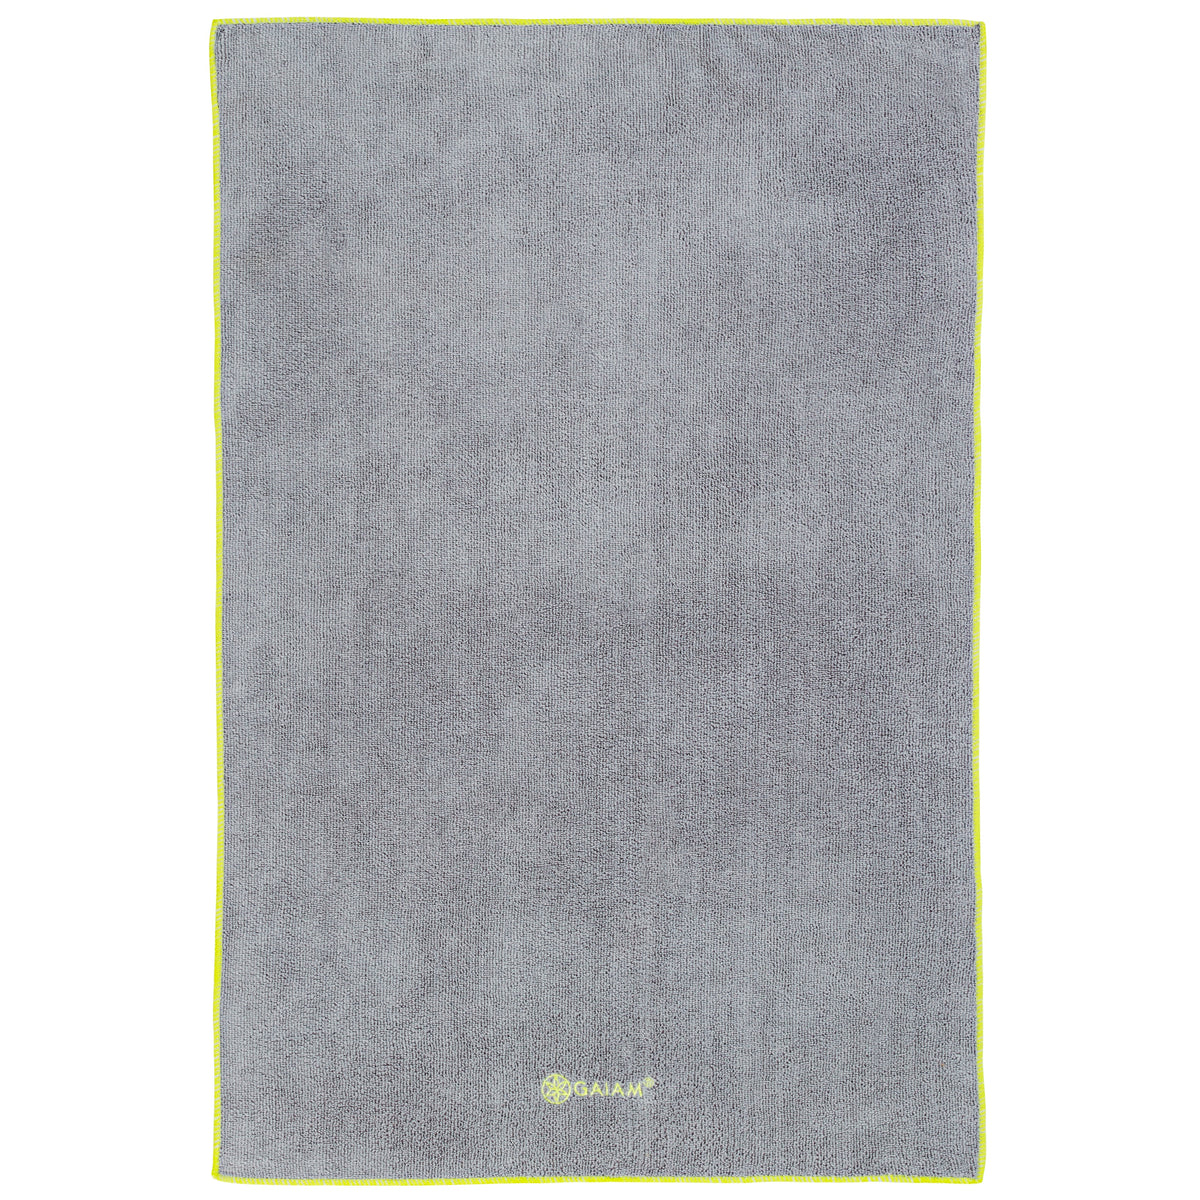 Gaiam Yoga Hand Towel Gray/Citron flat